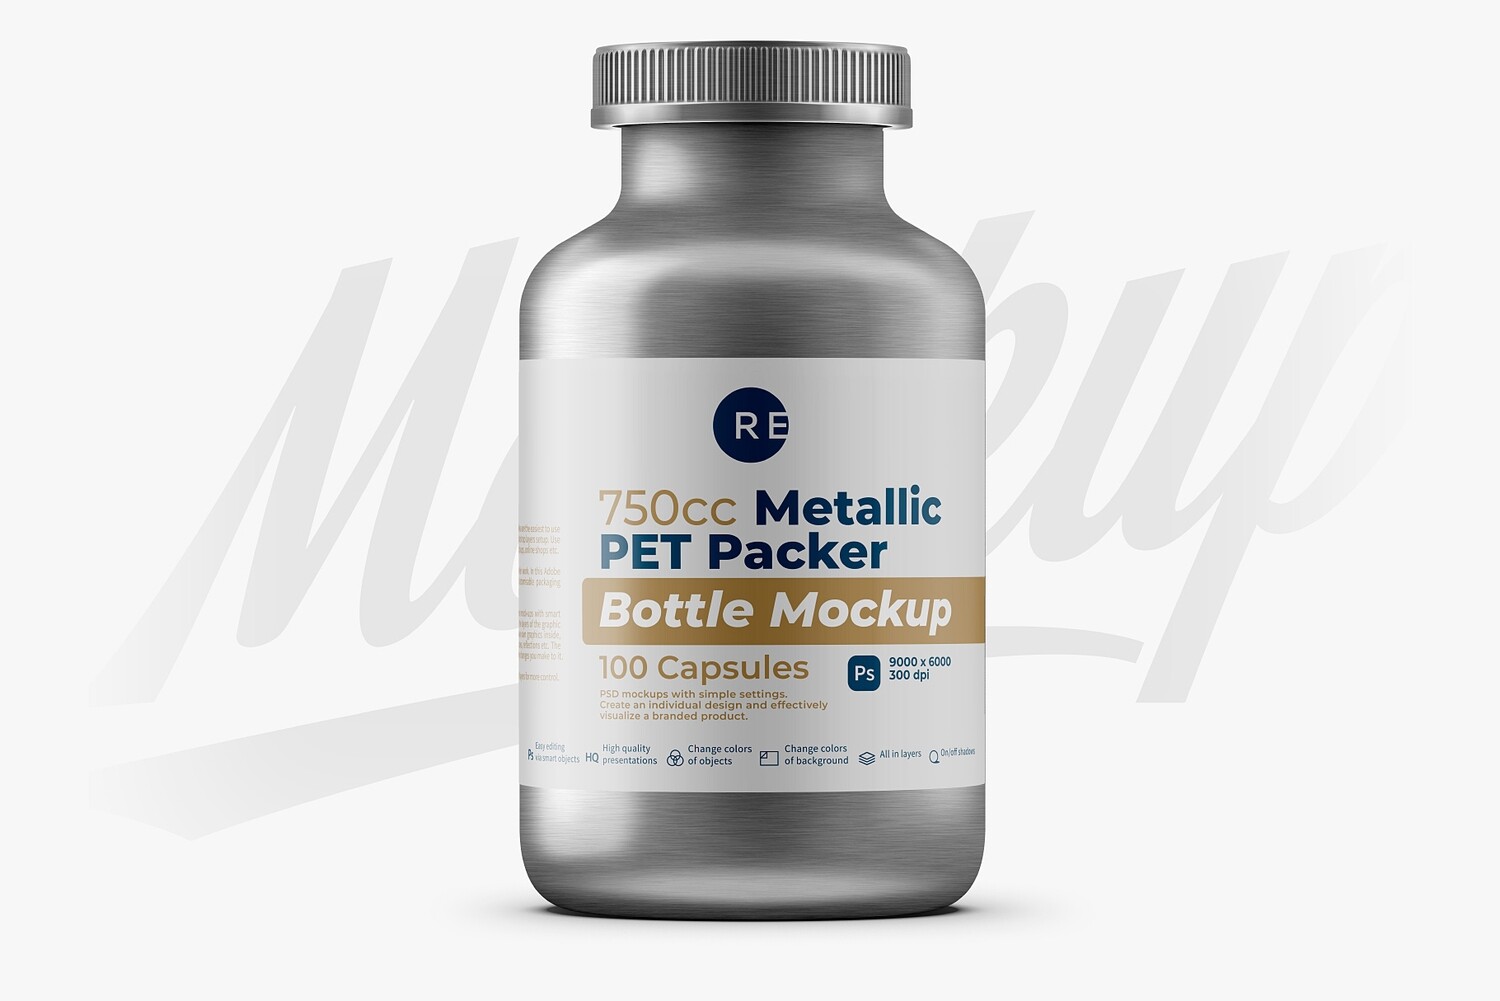 Metallic Plastic Pills Bottle Mockup 750cc